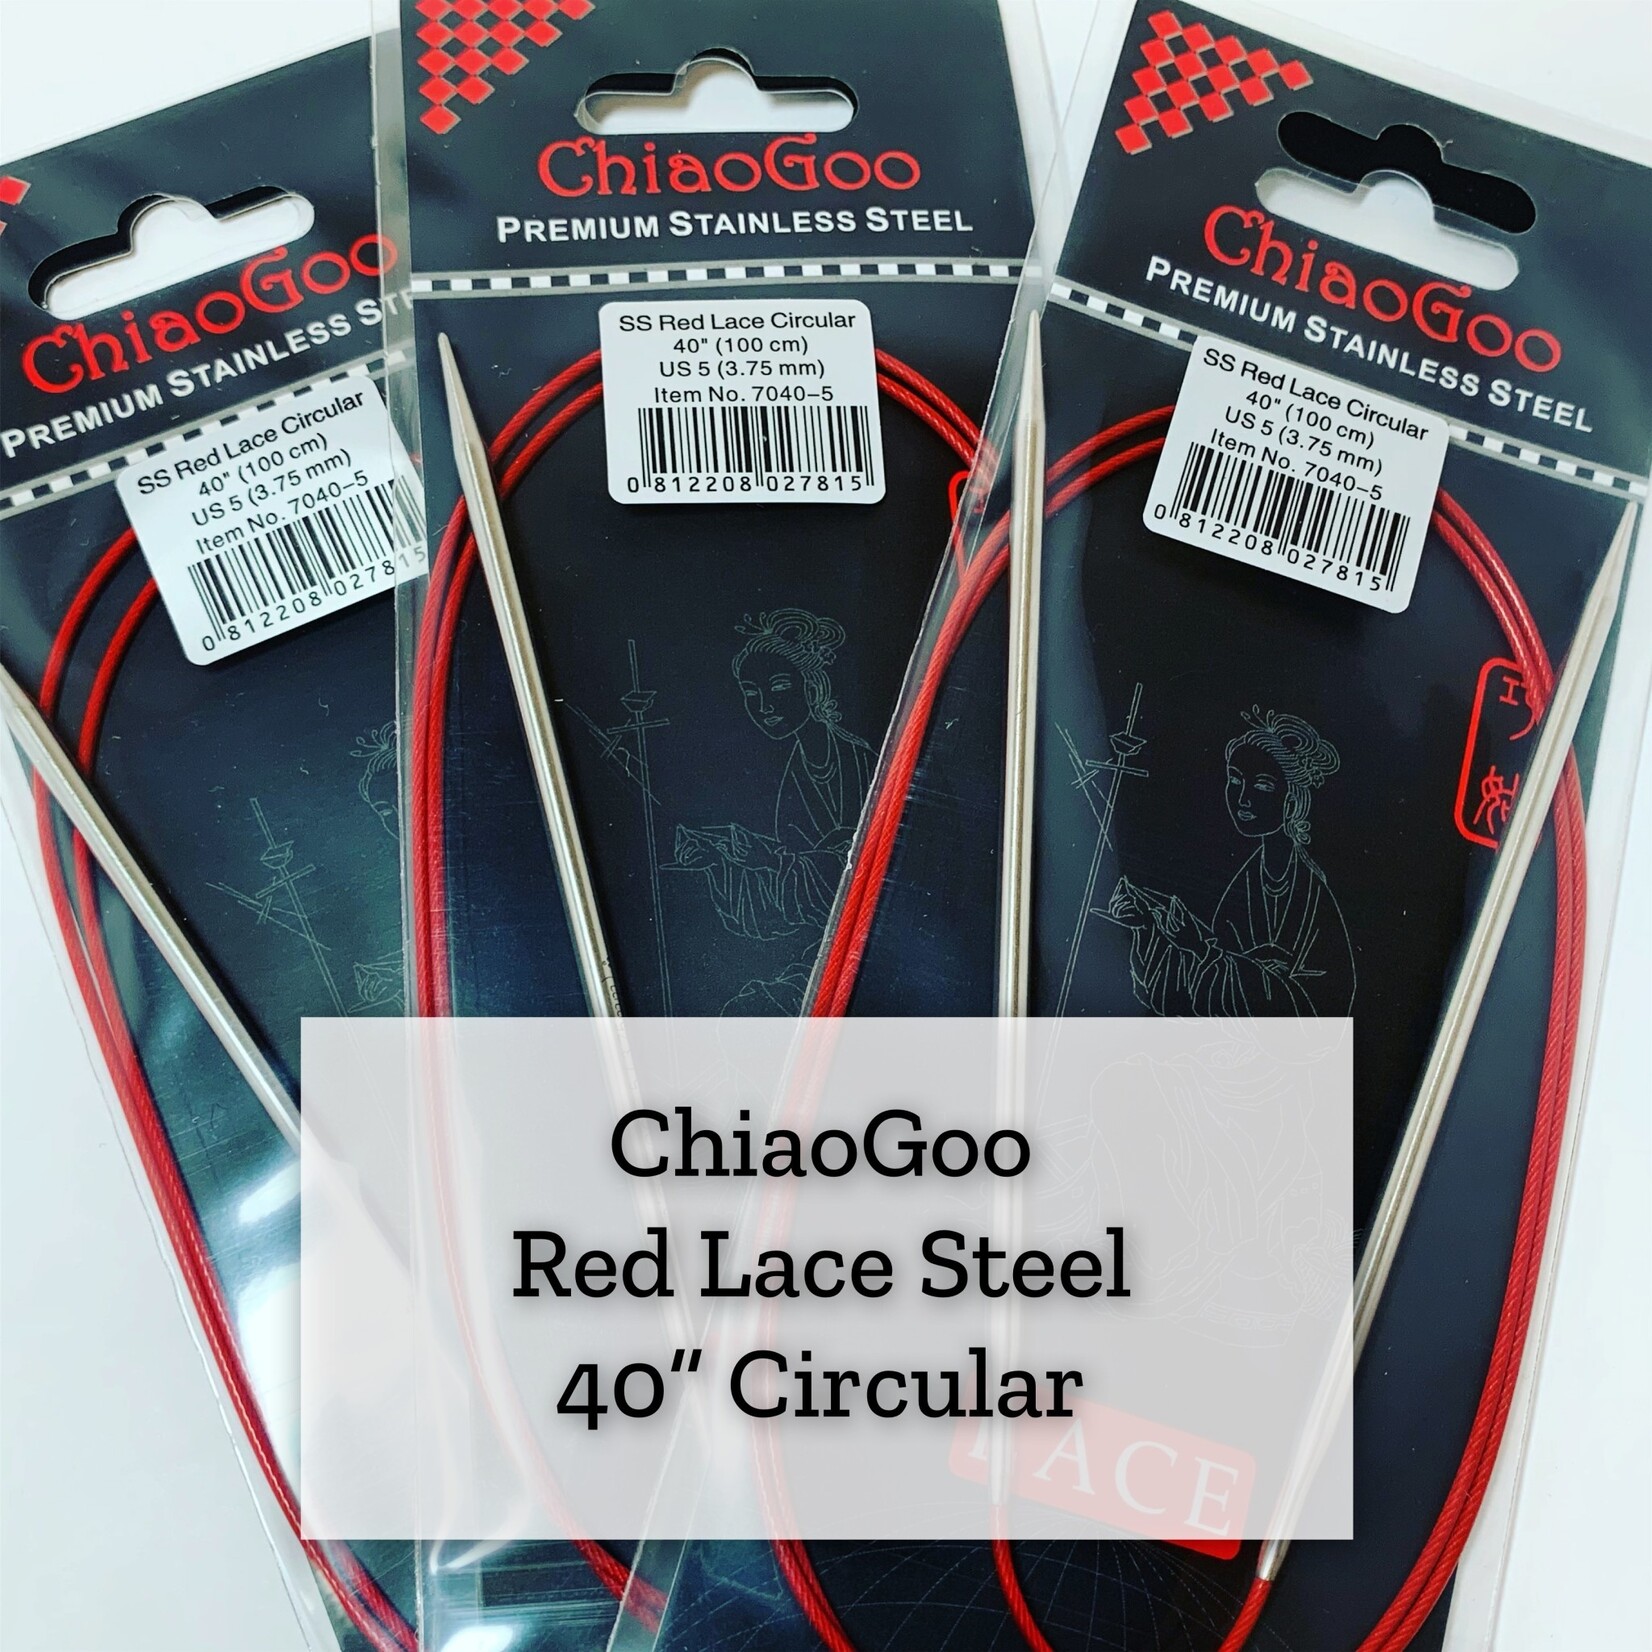 ChiaoGoo Red Lace Steel - 40" 5.5 mm